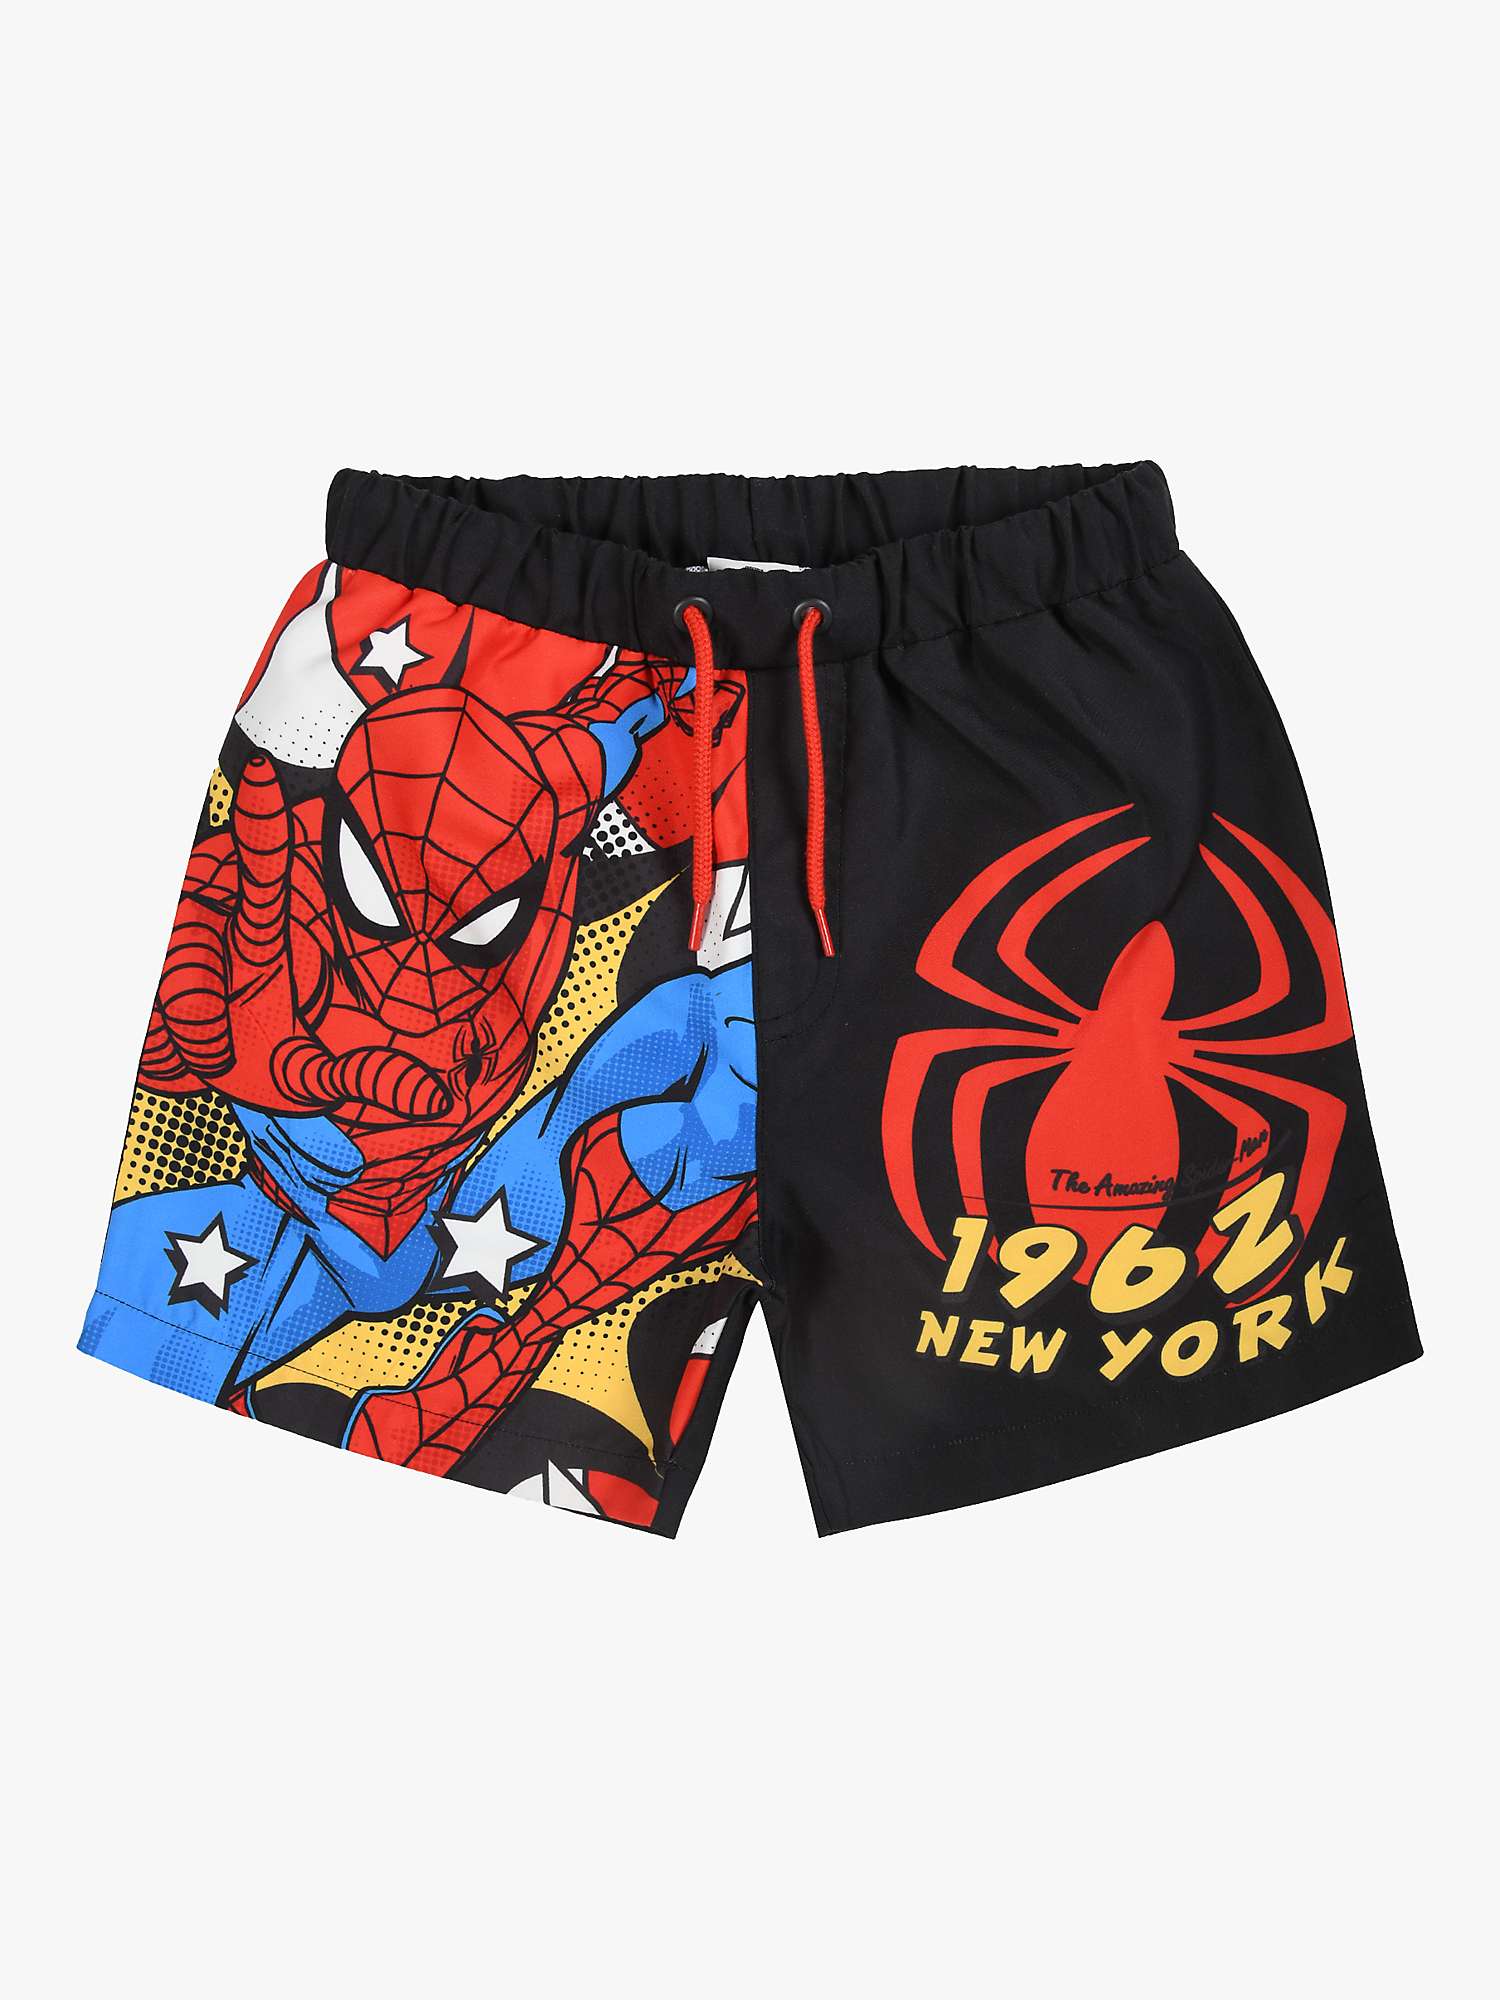 Spider-Man Men's Trunks Red/Navy